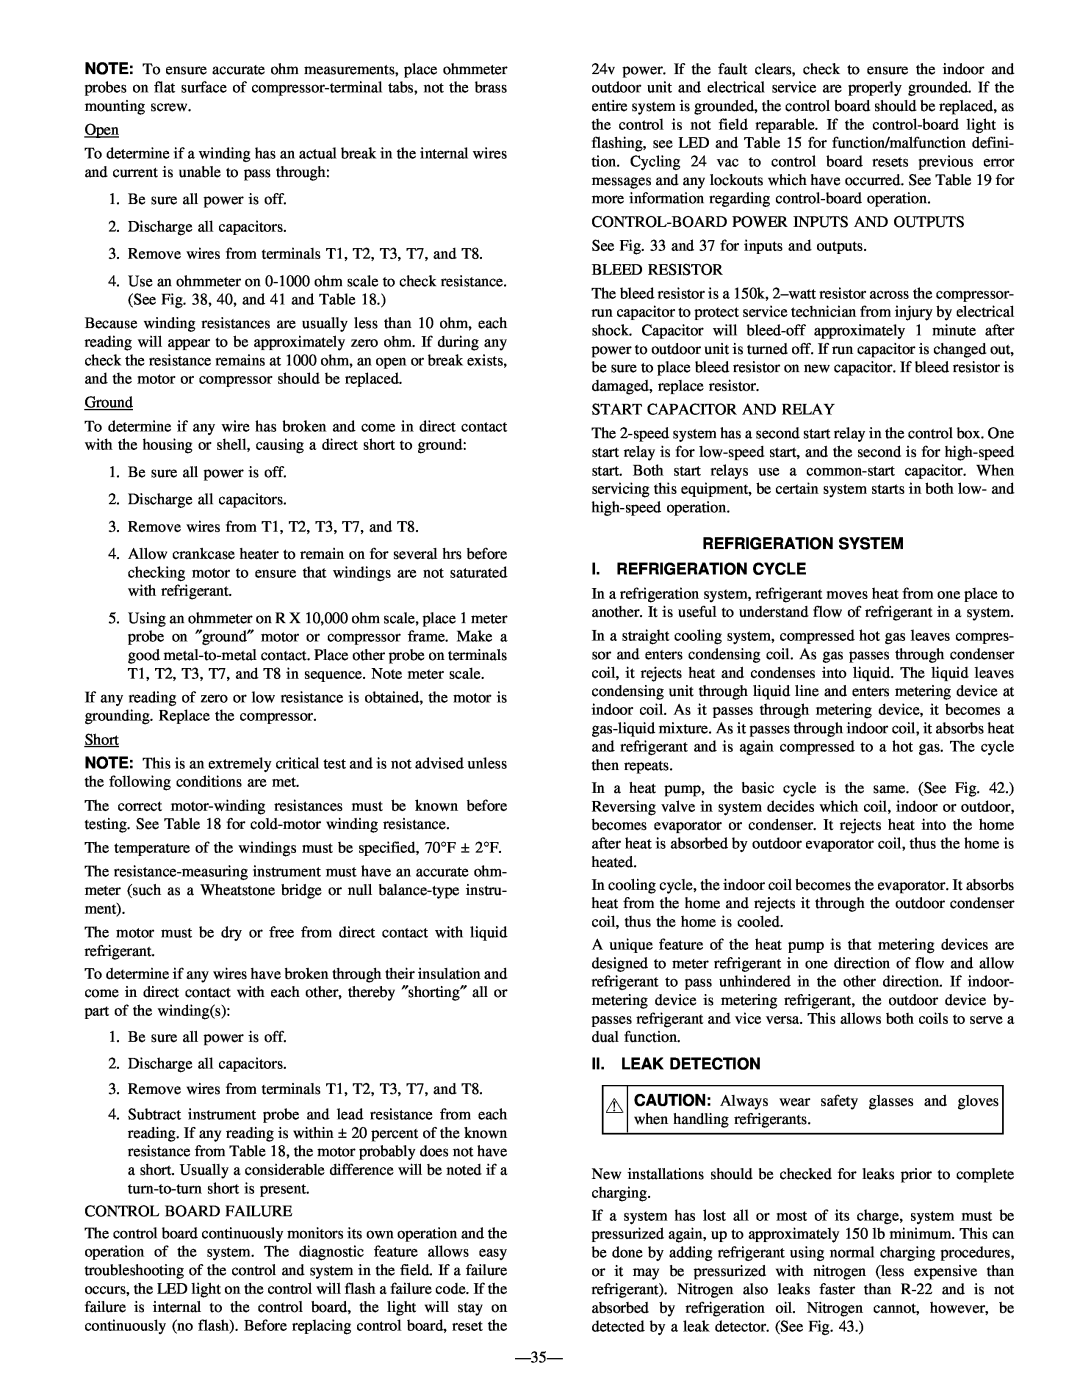 Bryant R-22 service manual Refrigeration System I. Refrigeration Cycle, Ii. Leak Detection 